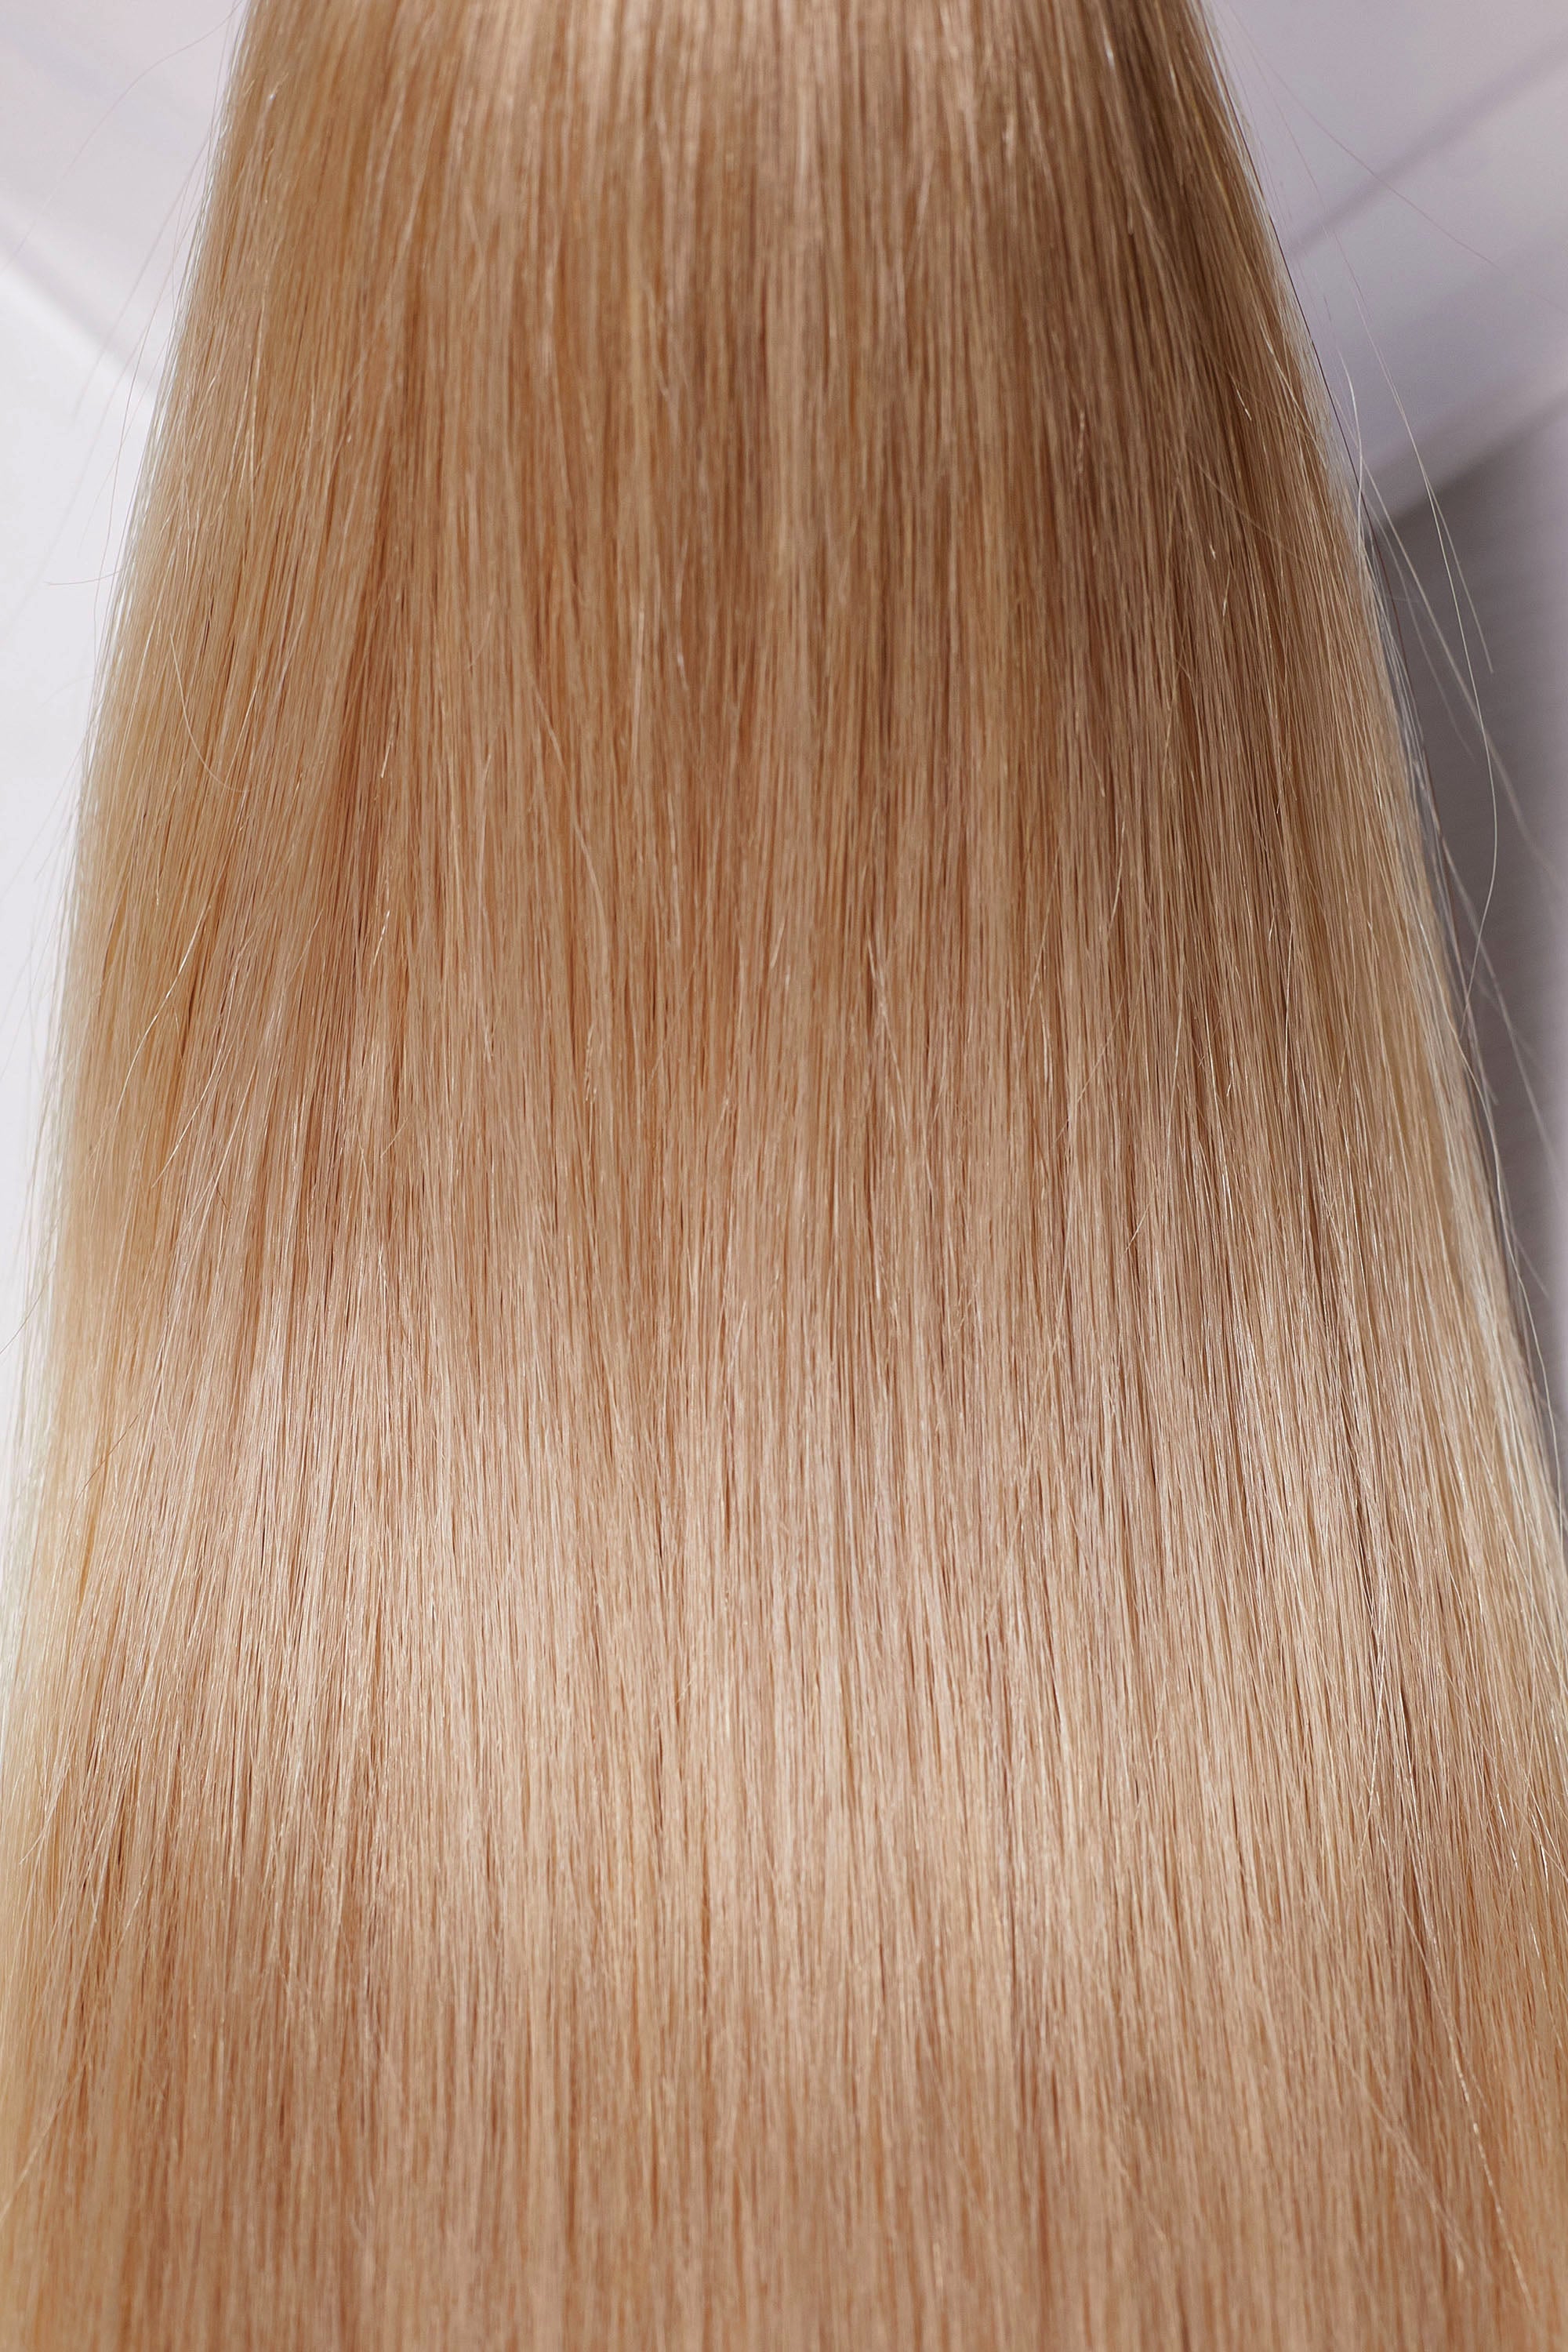 Behair professional Keratin Tip "Premium" 22" (55cm) Natural Straight Light Gold Sand #16 - 25g (Standart - 0.7g each pcs) hair extensions